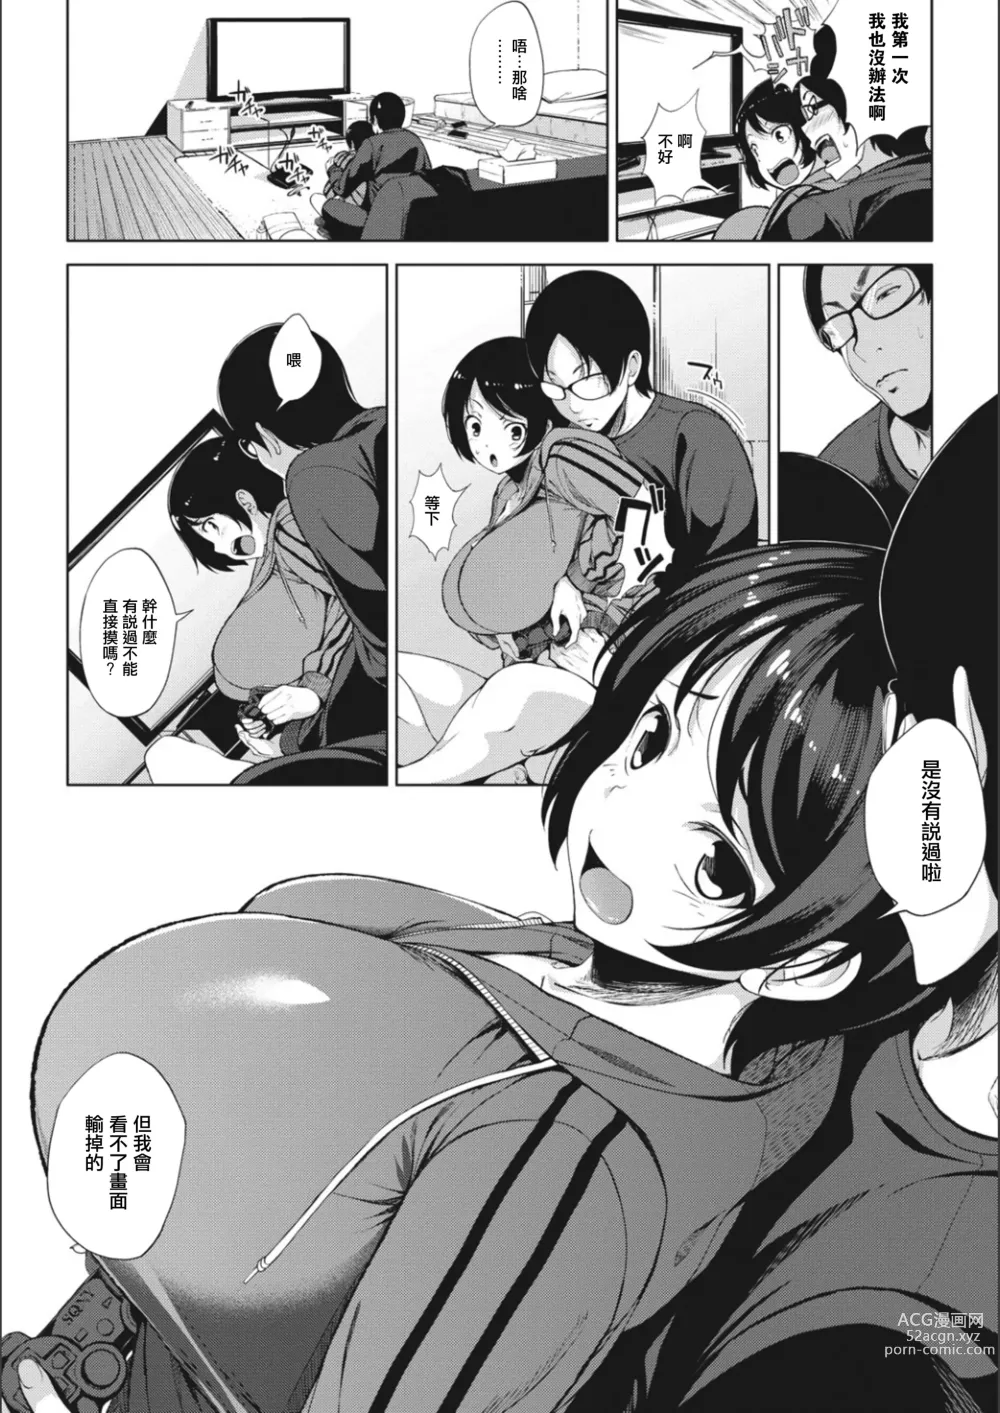 Page 6 of manga New Game